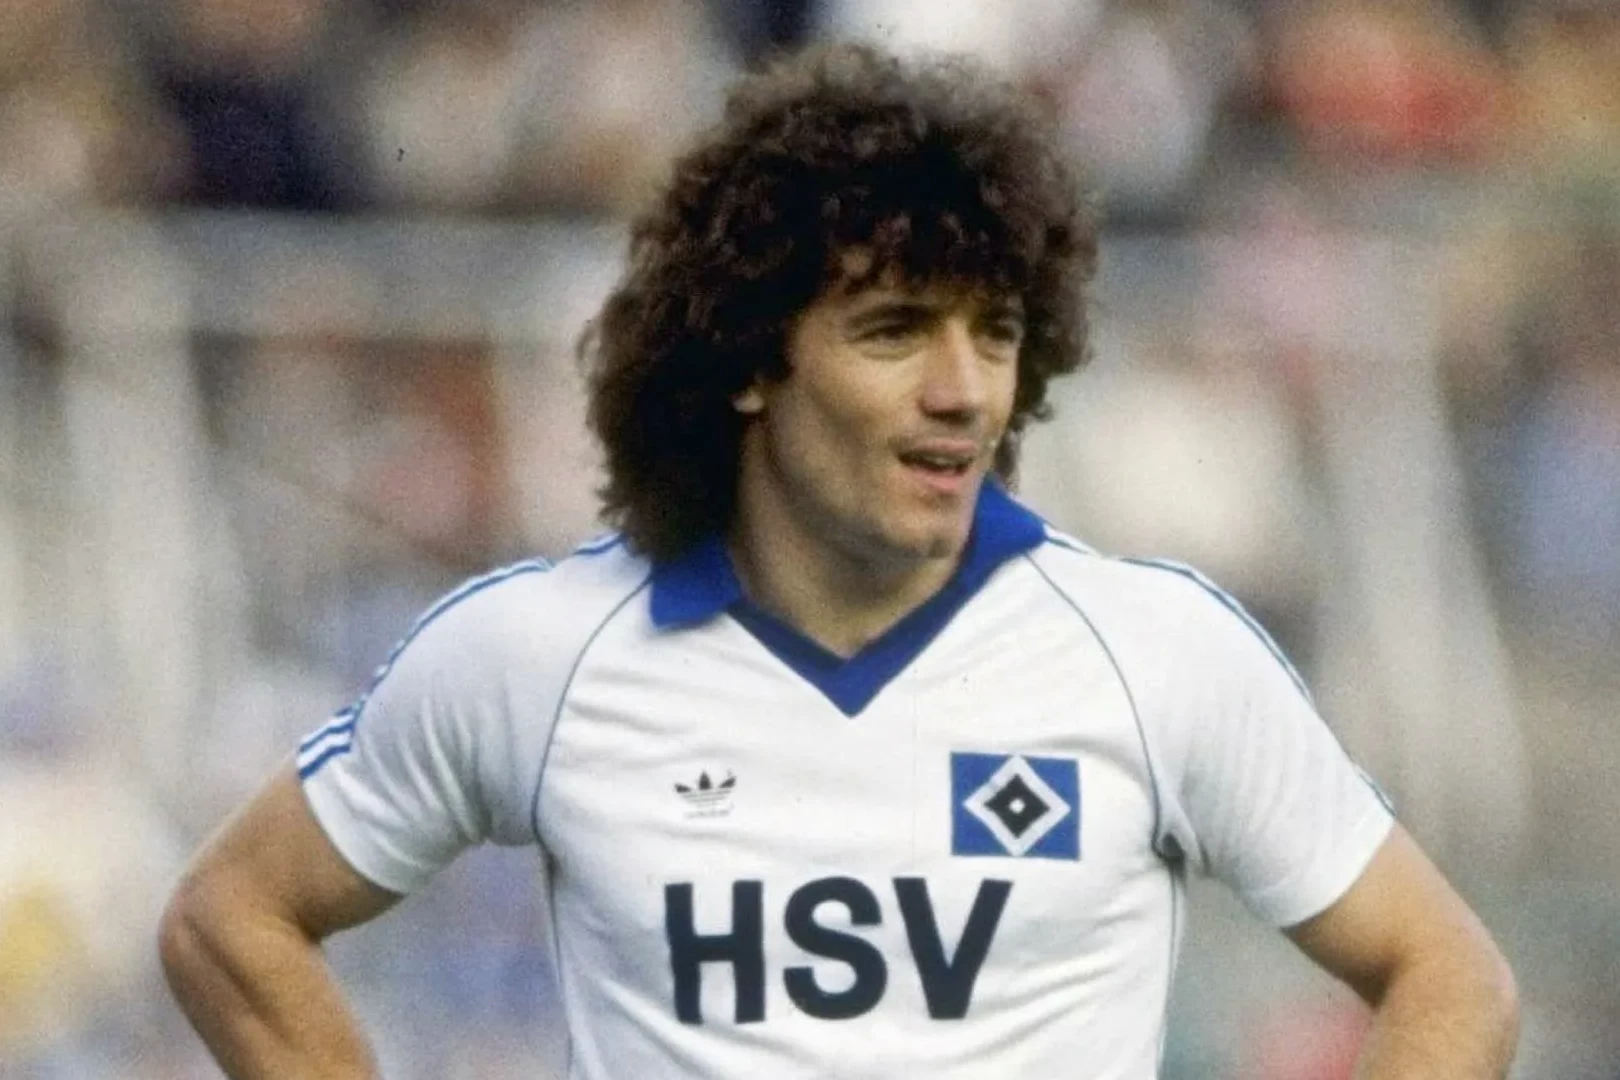 Kevin keegan shocked the footballing world when he left the mighty Liverpool to join Bundeliga hopefuls SV Hamburg in 1977.